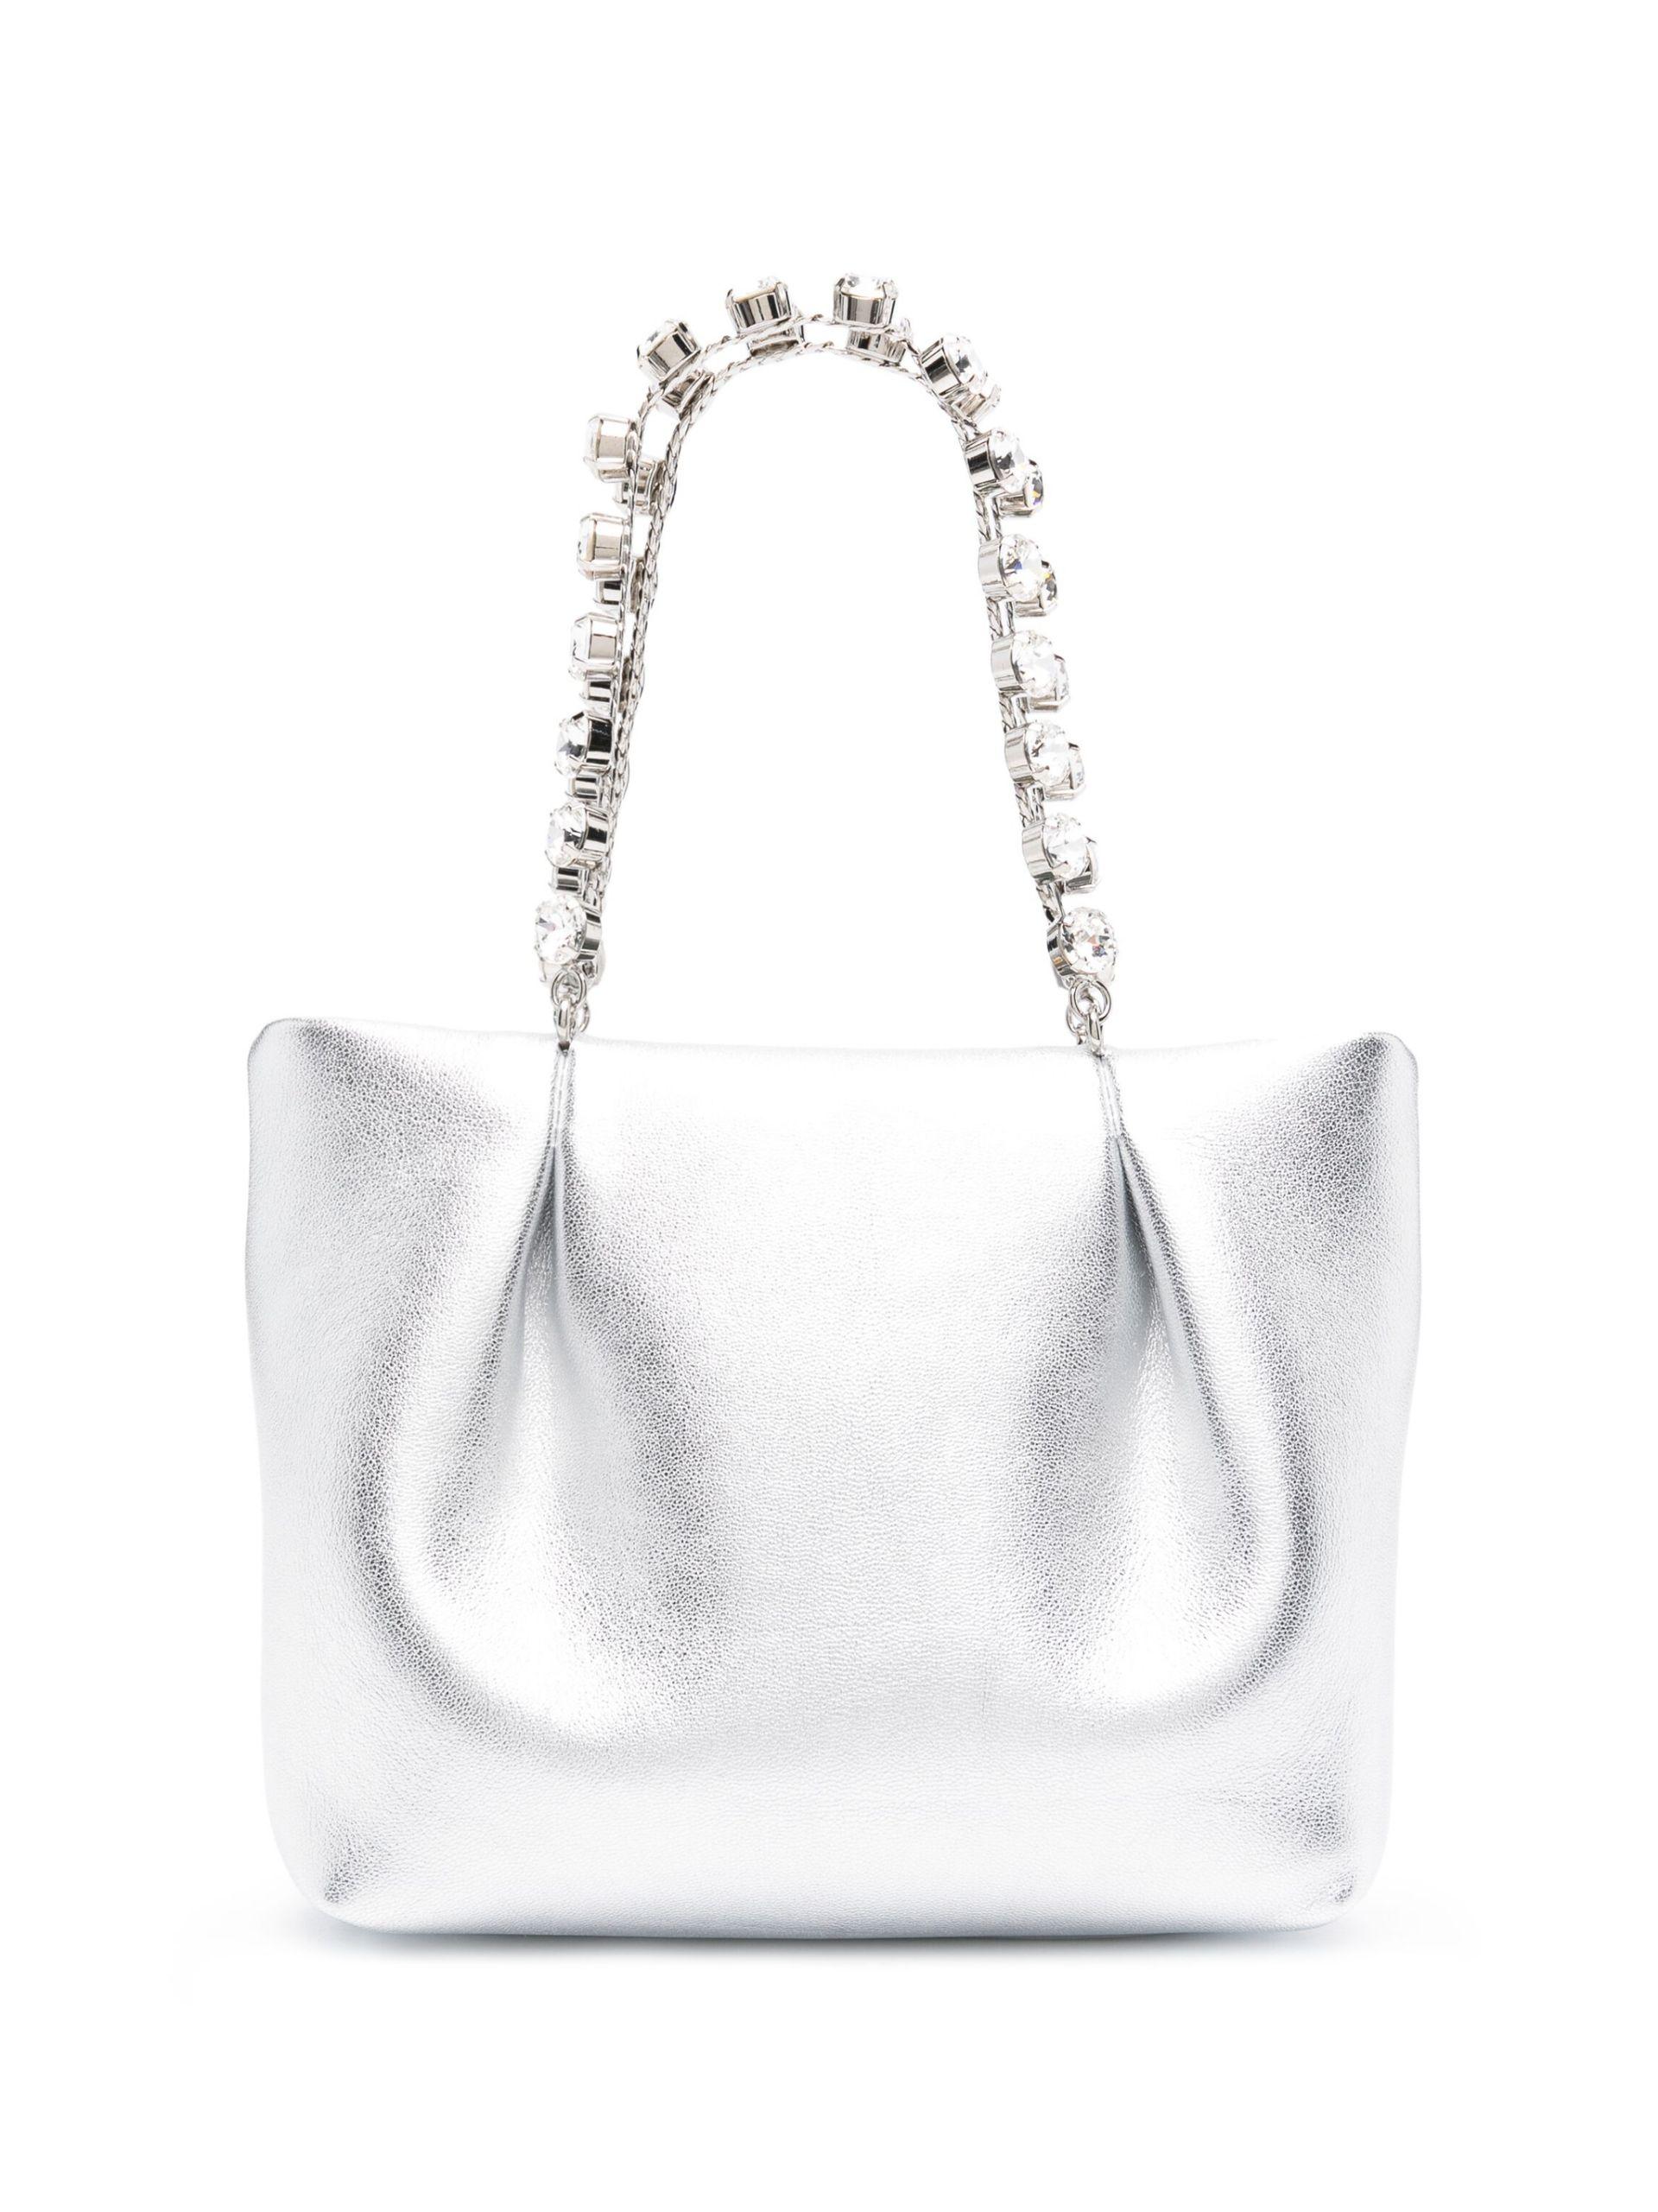 Aquazzura Galactic Crystal Leather Mini Bag in White | Lyst